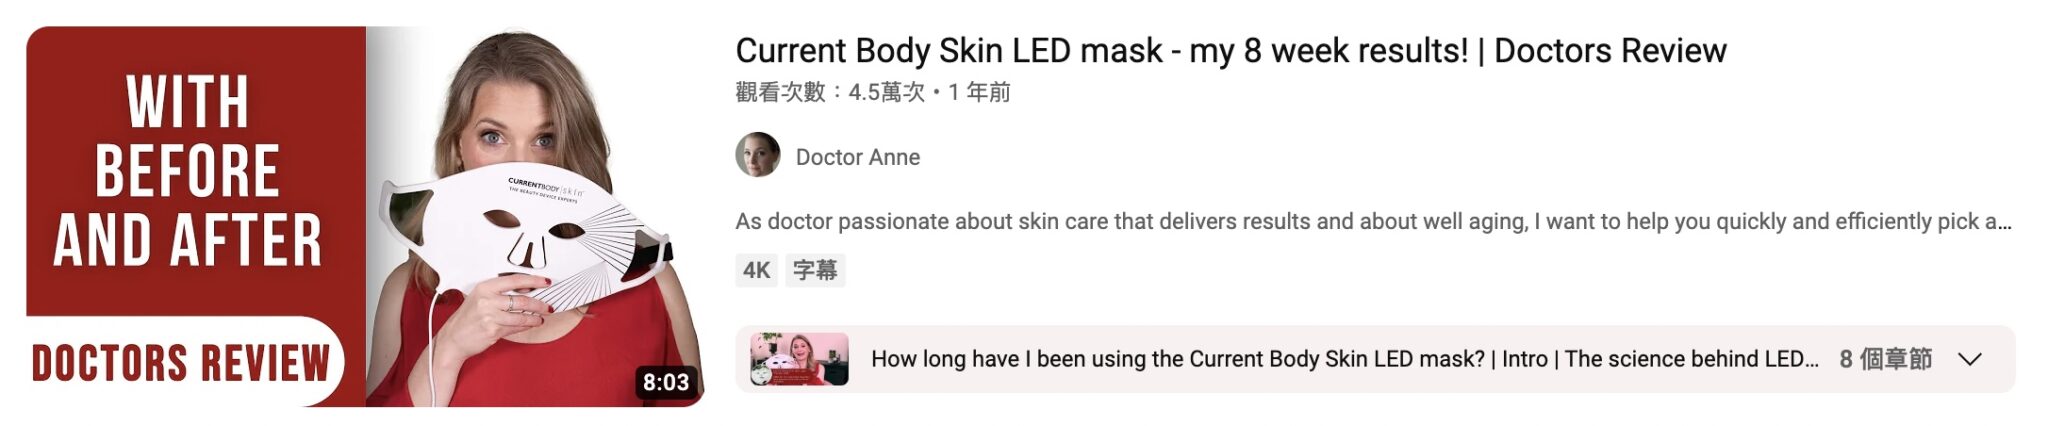 current body LED mask tutorial